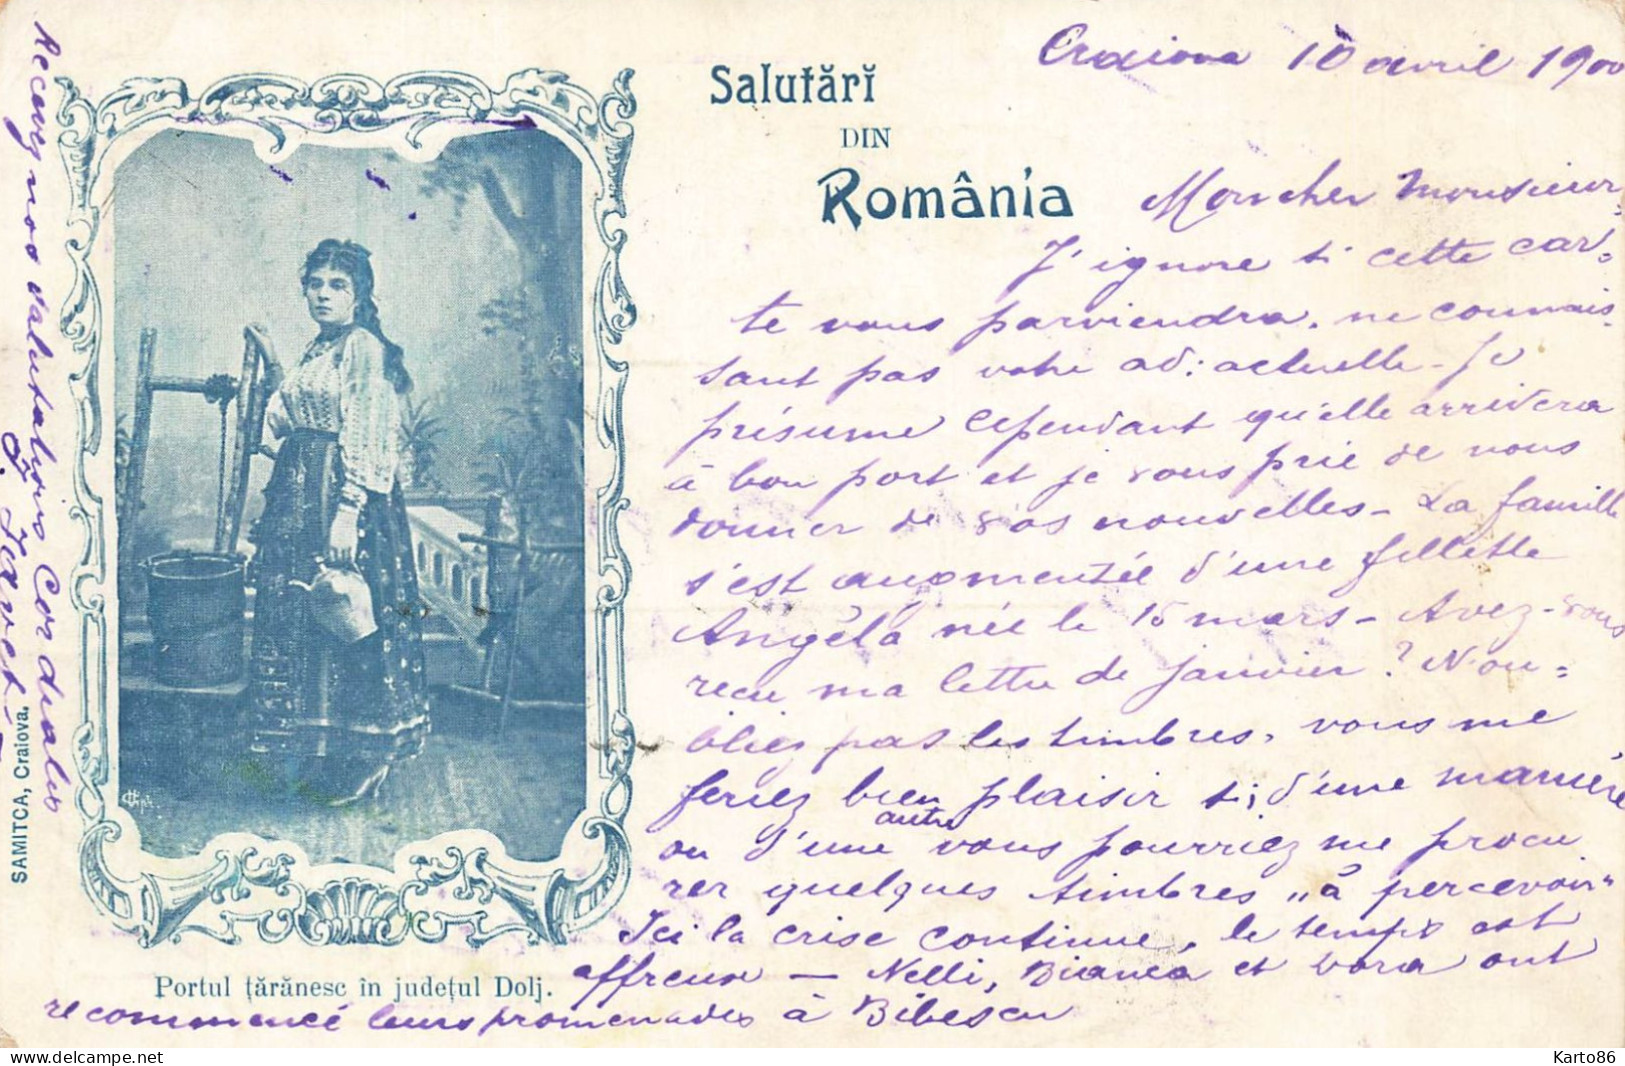 Salutari Din Romania * 1900 * Portul Taranese In Judetukl Dolj * Romania Roman Roumanie - Roumanie